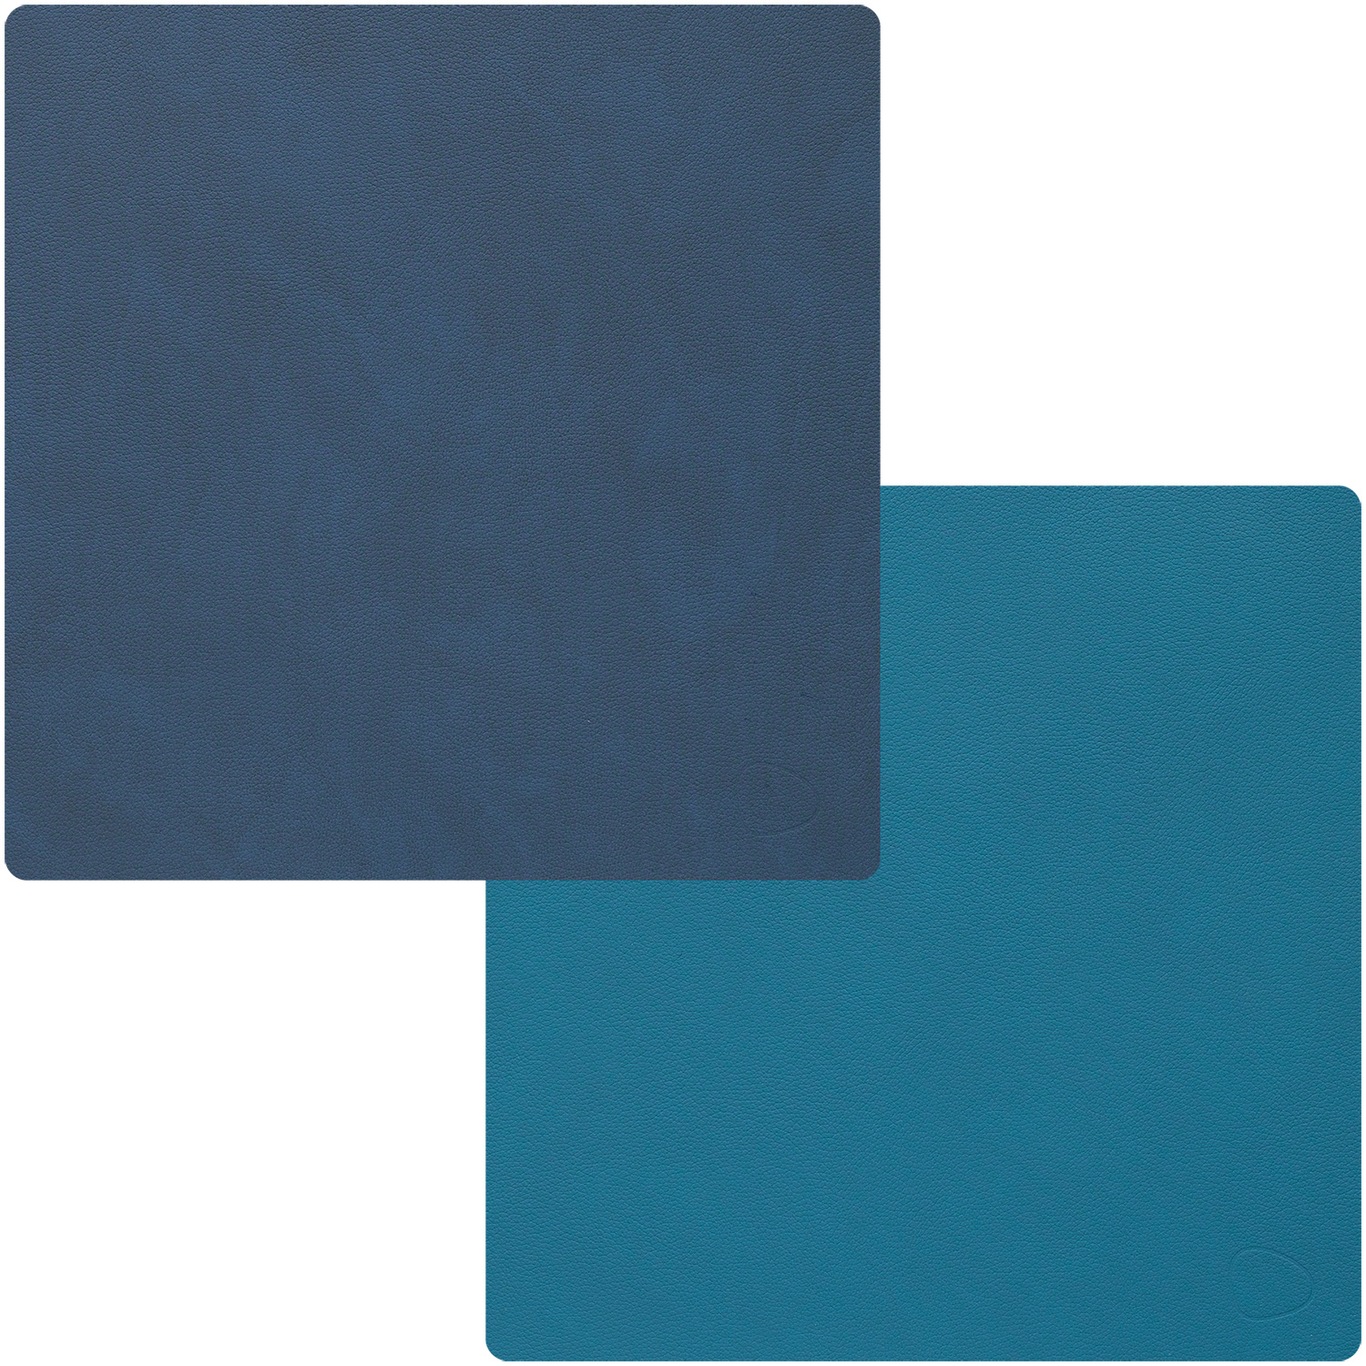 Square S Bordstablett Double, 28x28 cm, Midnight Blue/Petrol